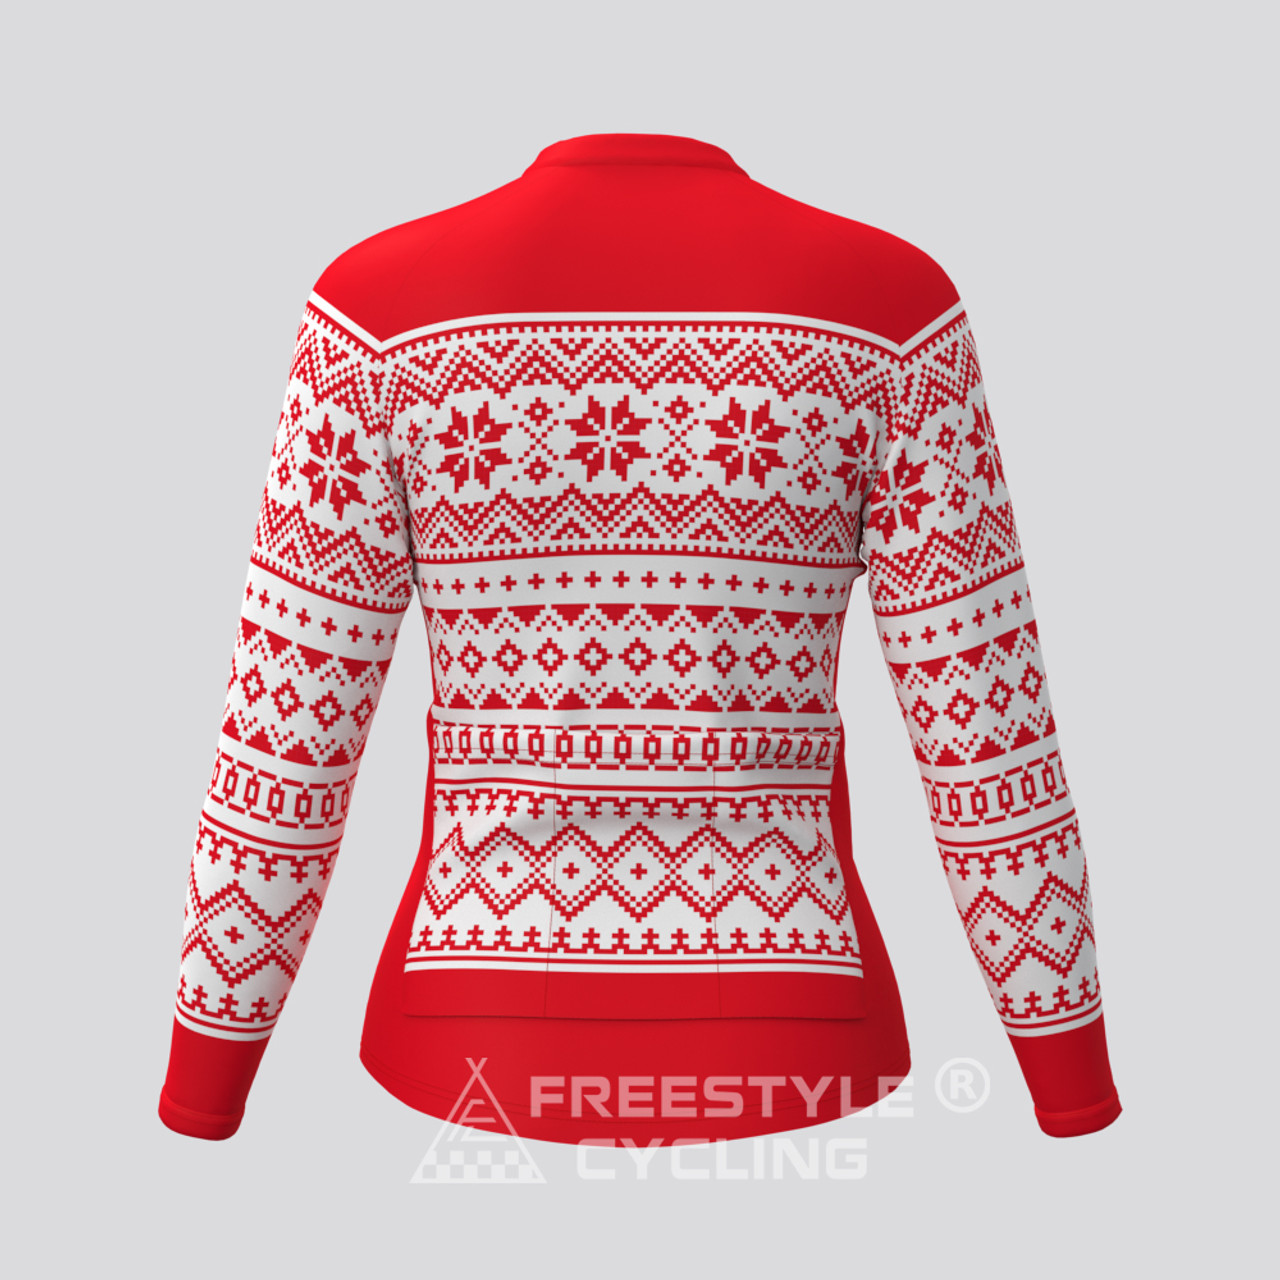 OT Sports Toledo Mud Hens Ugly Christmas Sweater Replica Jersey Medium